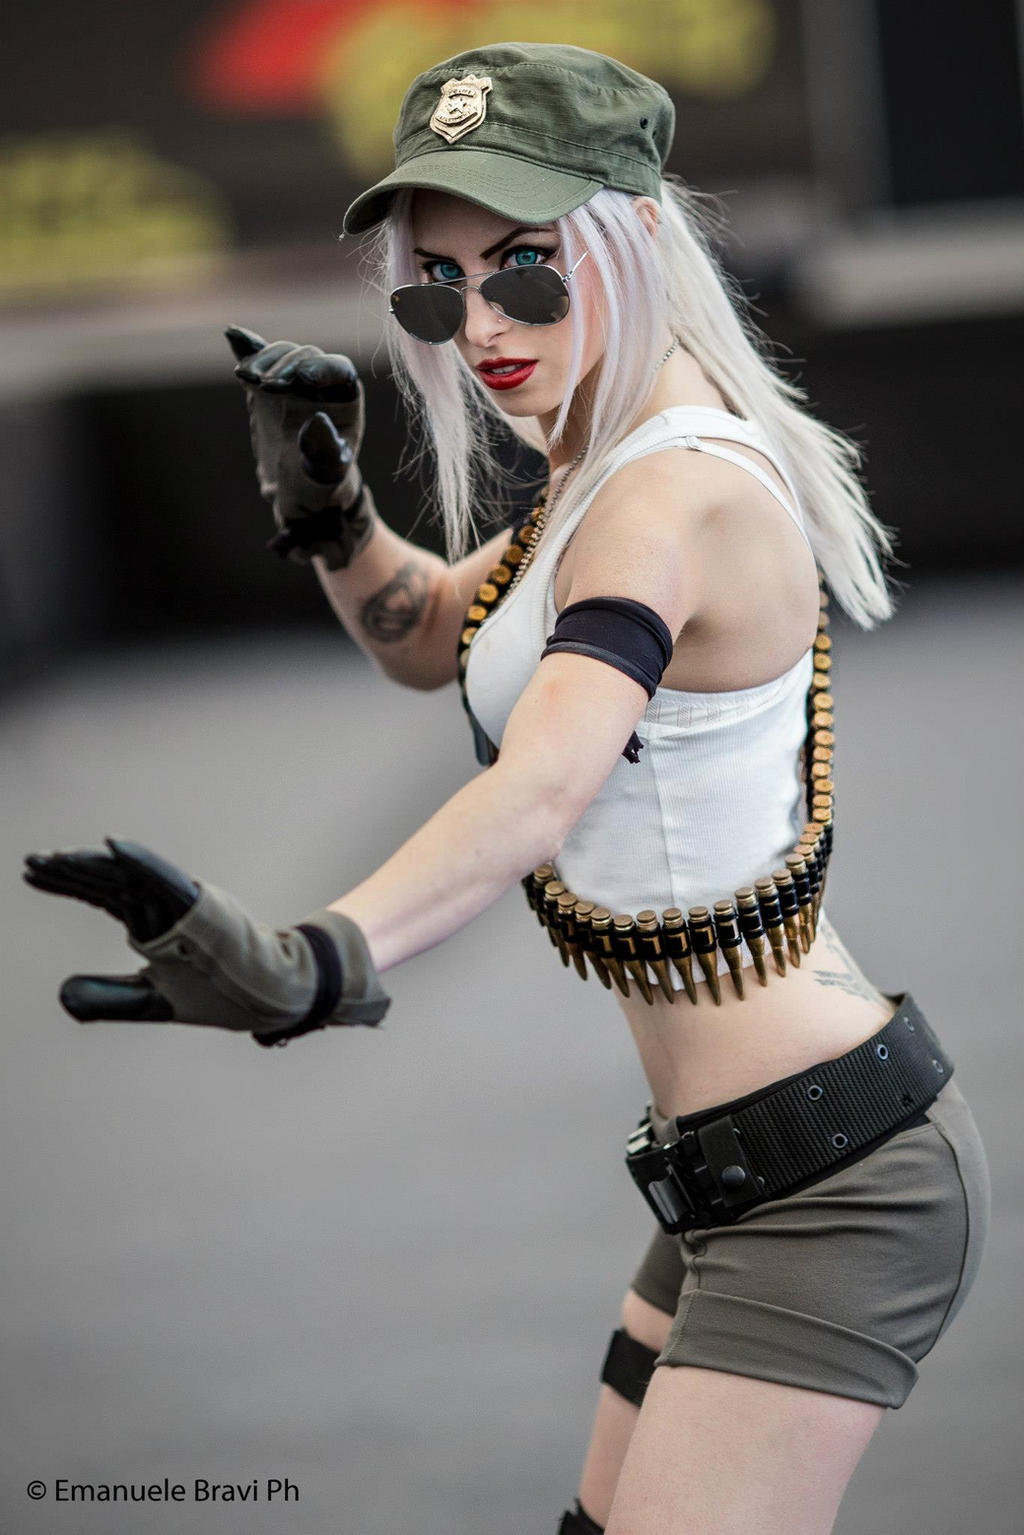 Sonya blade cosplay costume